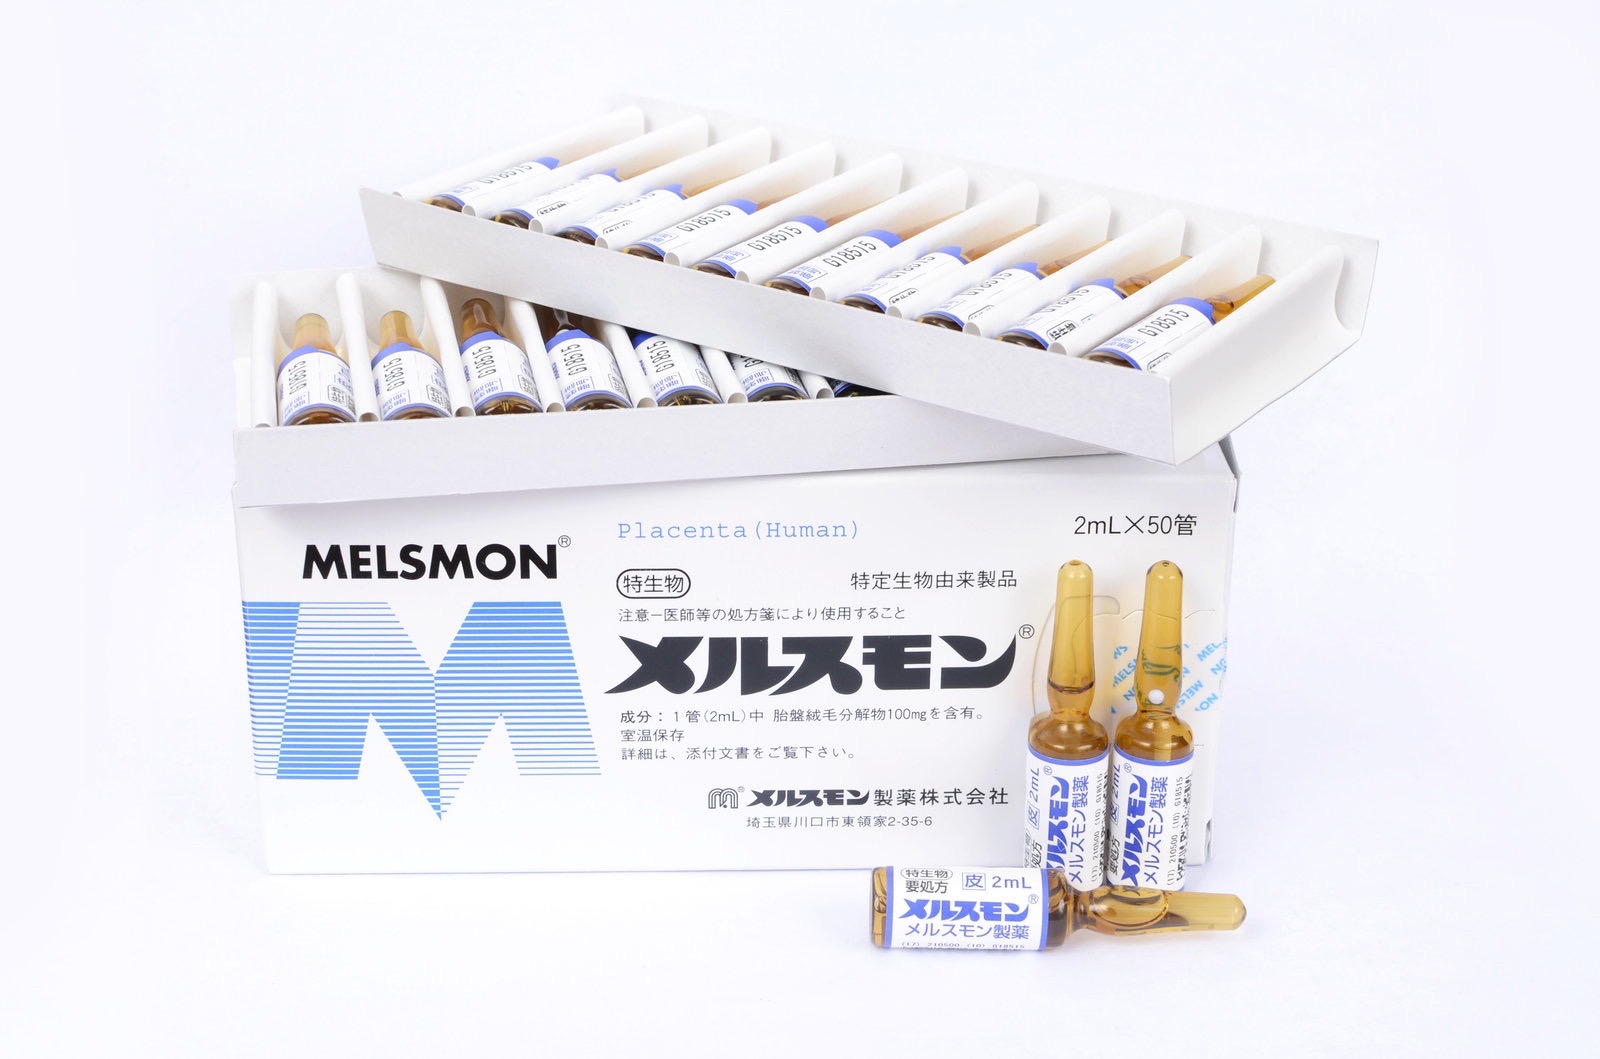 Плацентарные препараты Laennec и Melsmon (Мелсмон)